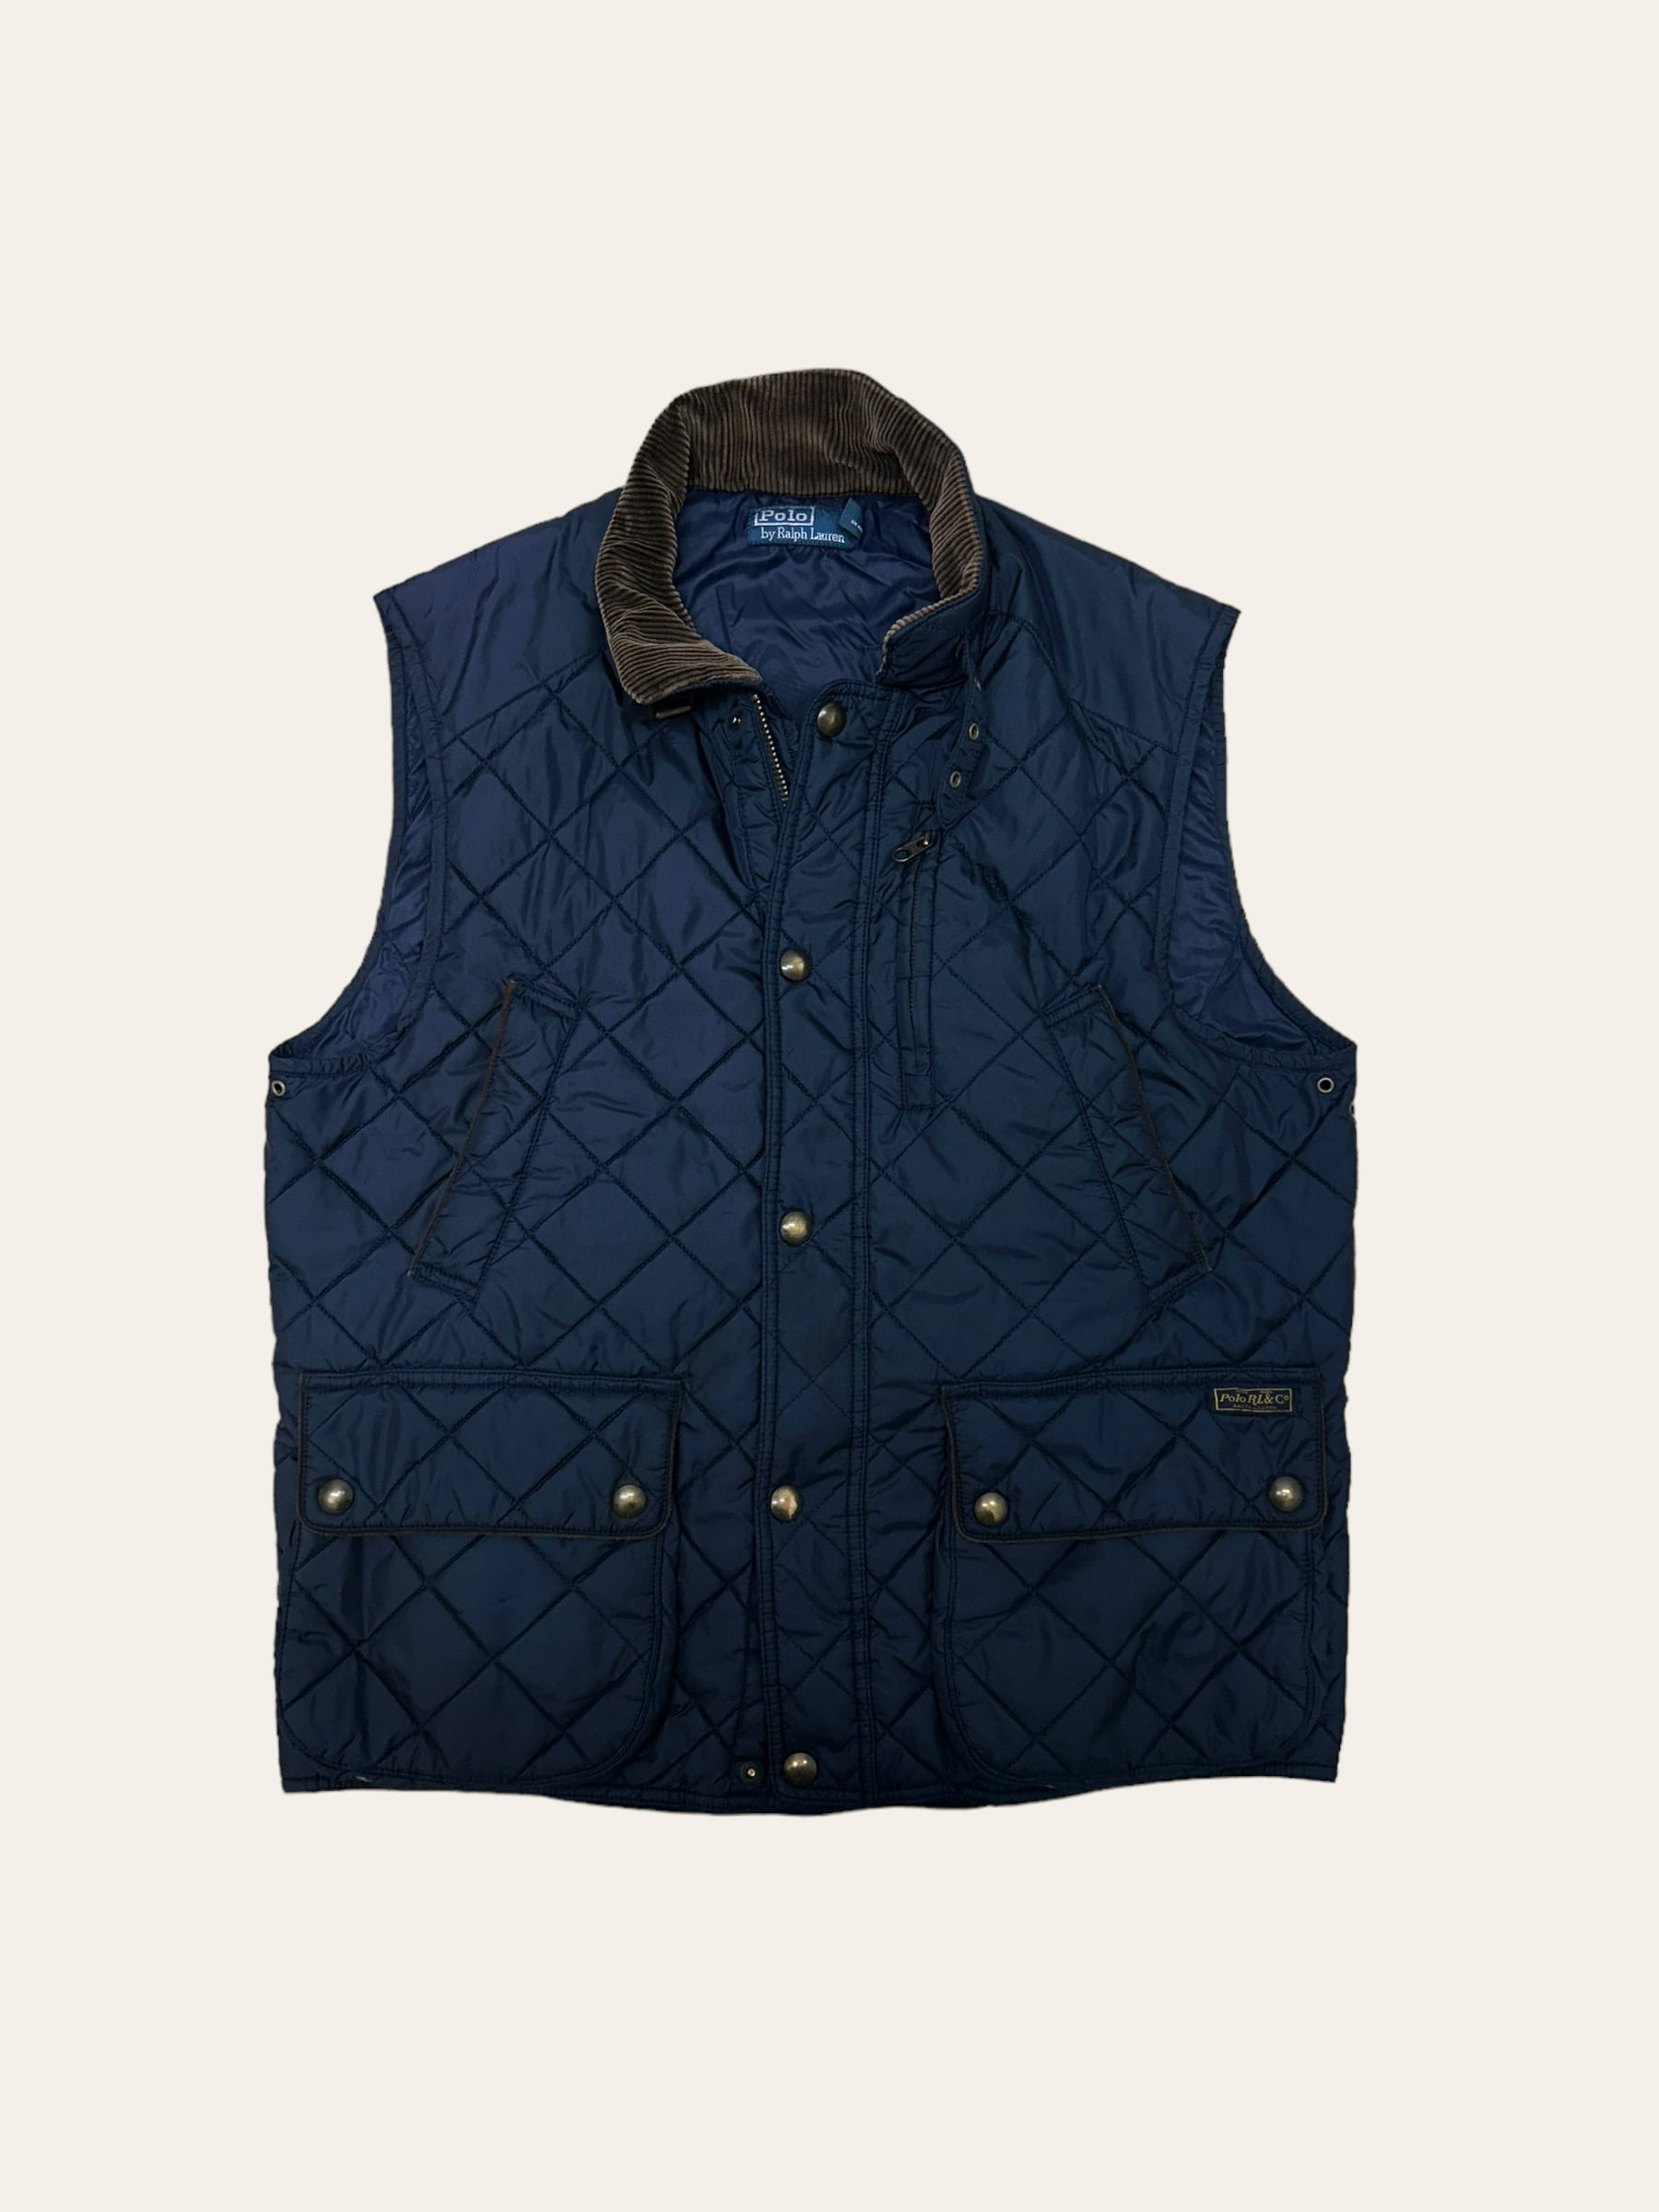 Polo ralph lauren navy quilted vest XL